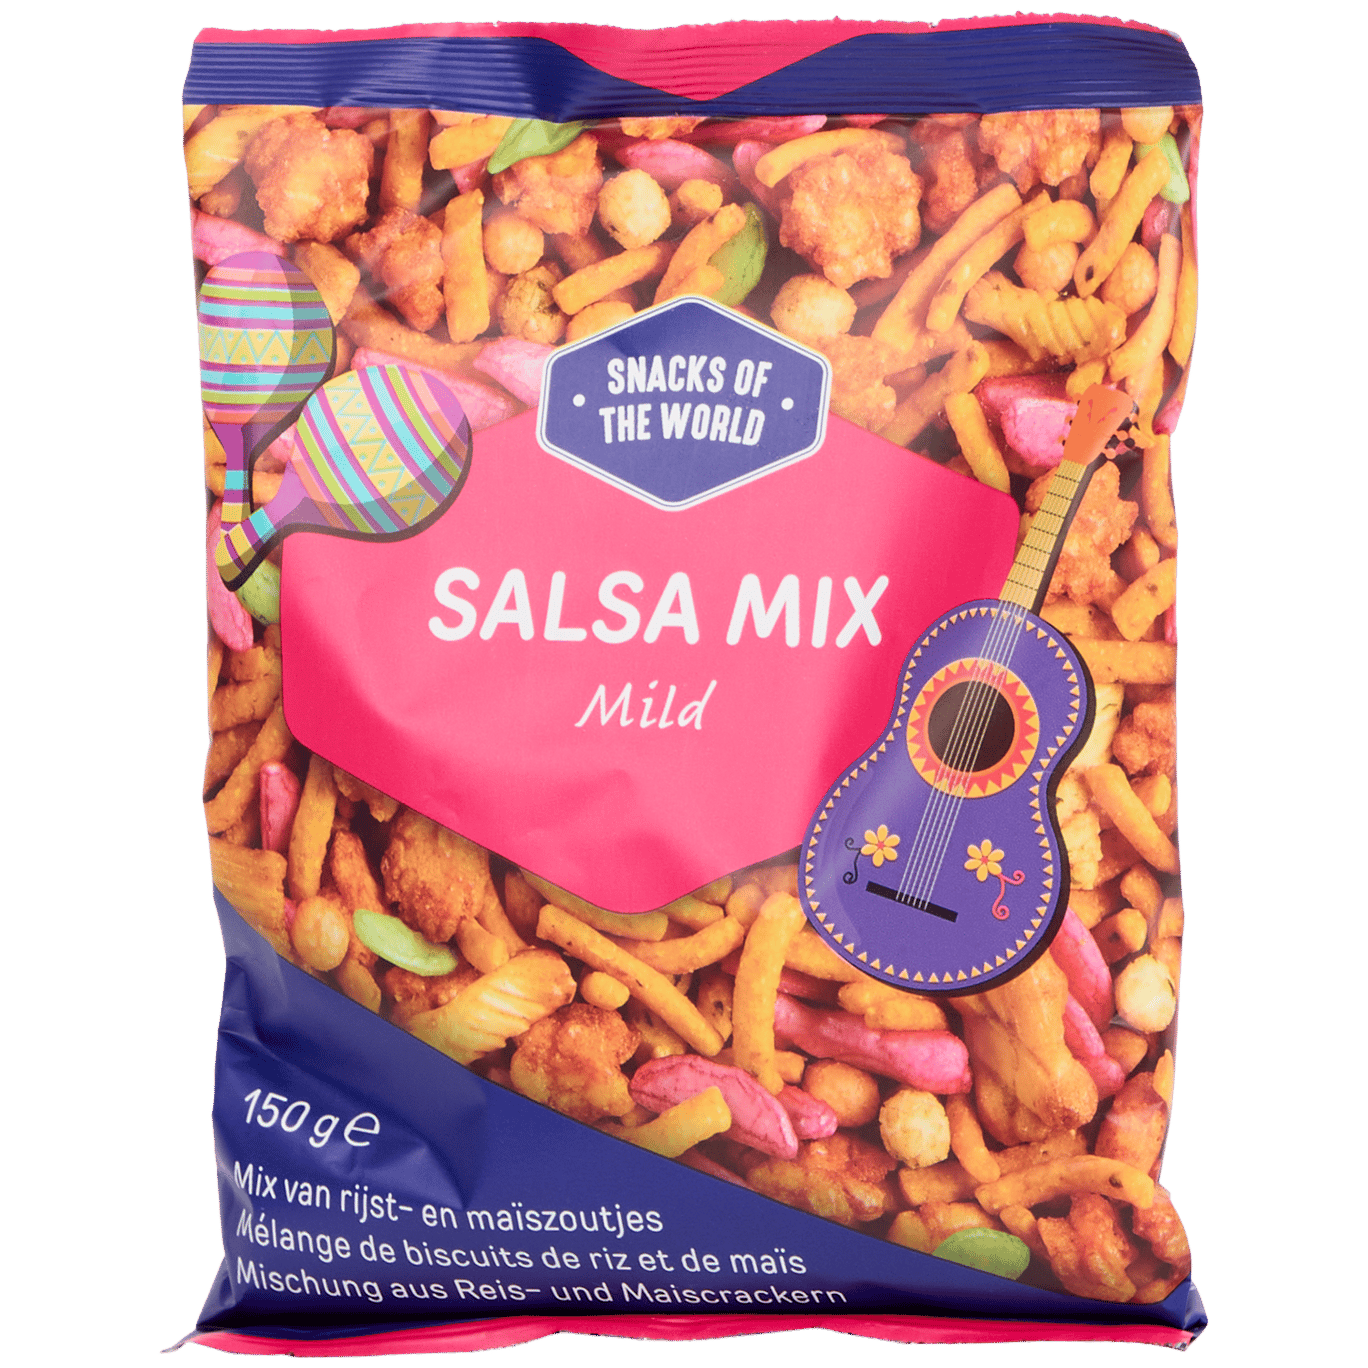 Salsa Mix Snacks of the World Mild